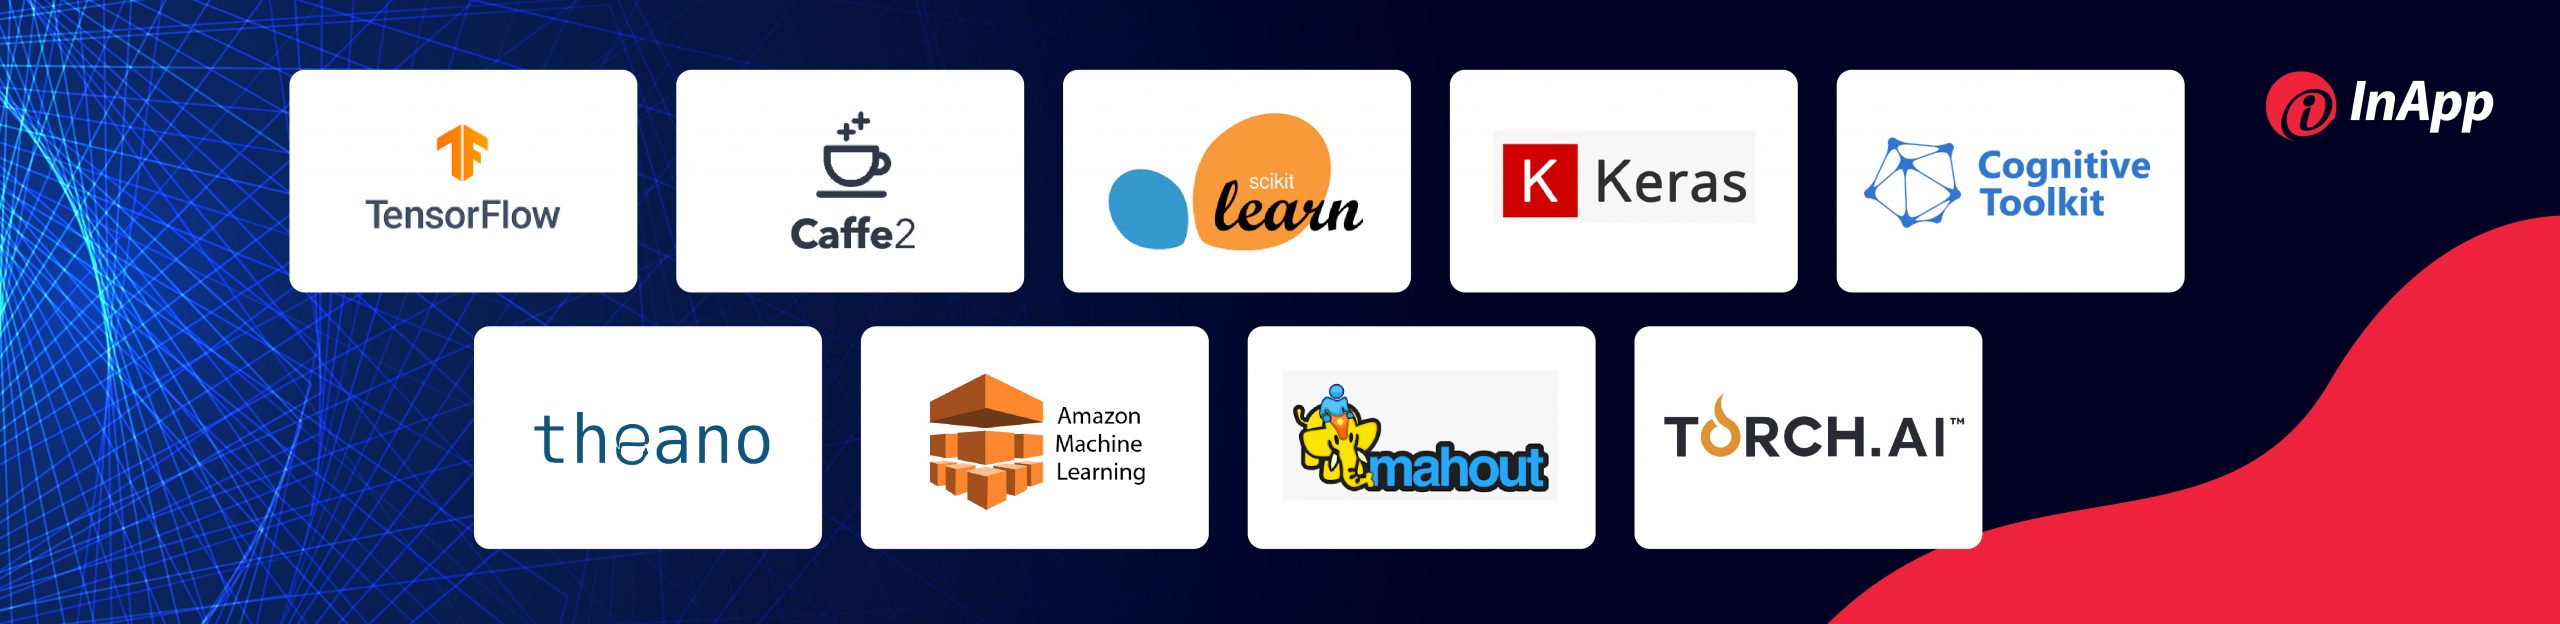 Tensor Flow, Caffe, Scikit Learn, Keras, Microsoft CNTK, Theano, Amazon Machine Learning, Apache Mahout, Torch